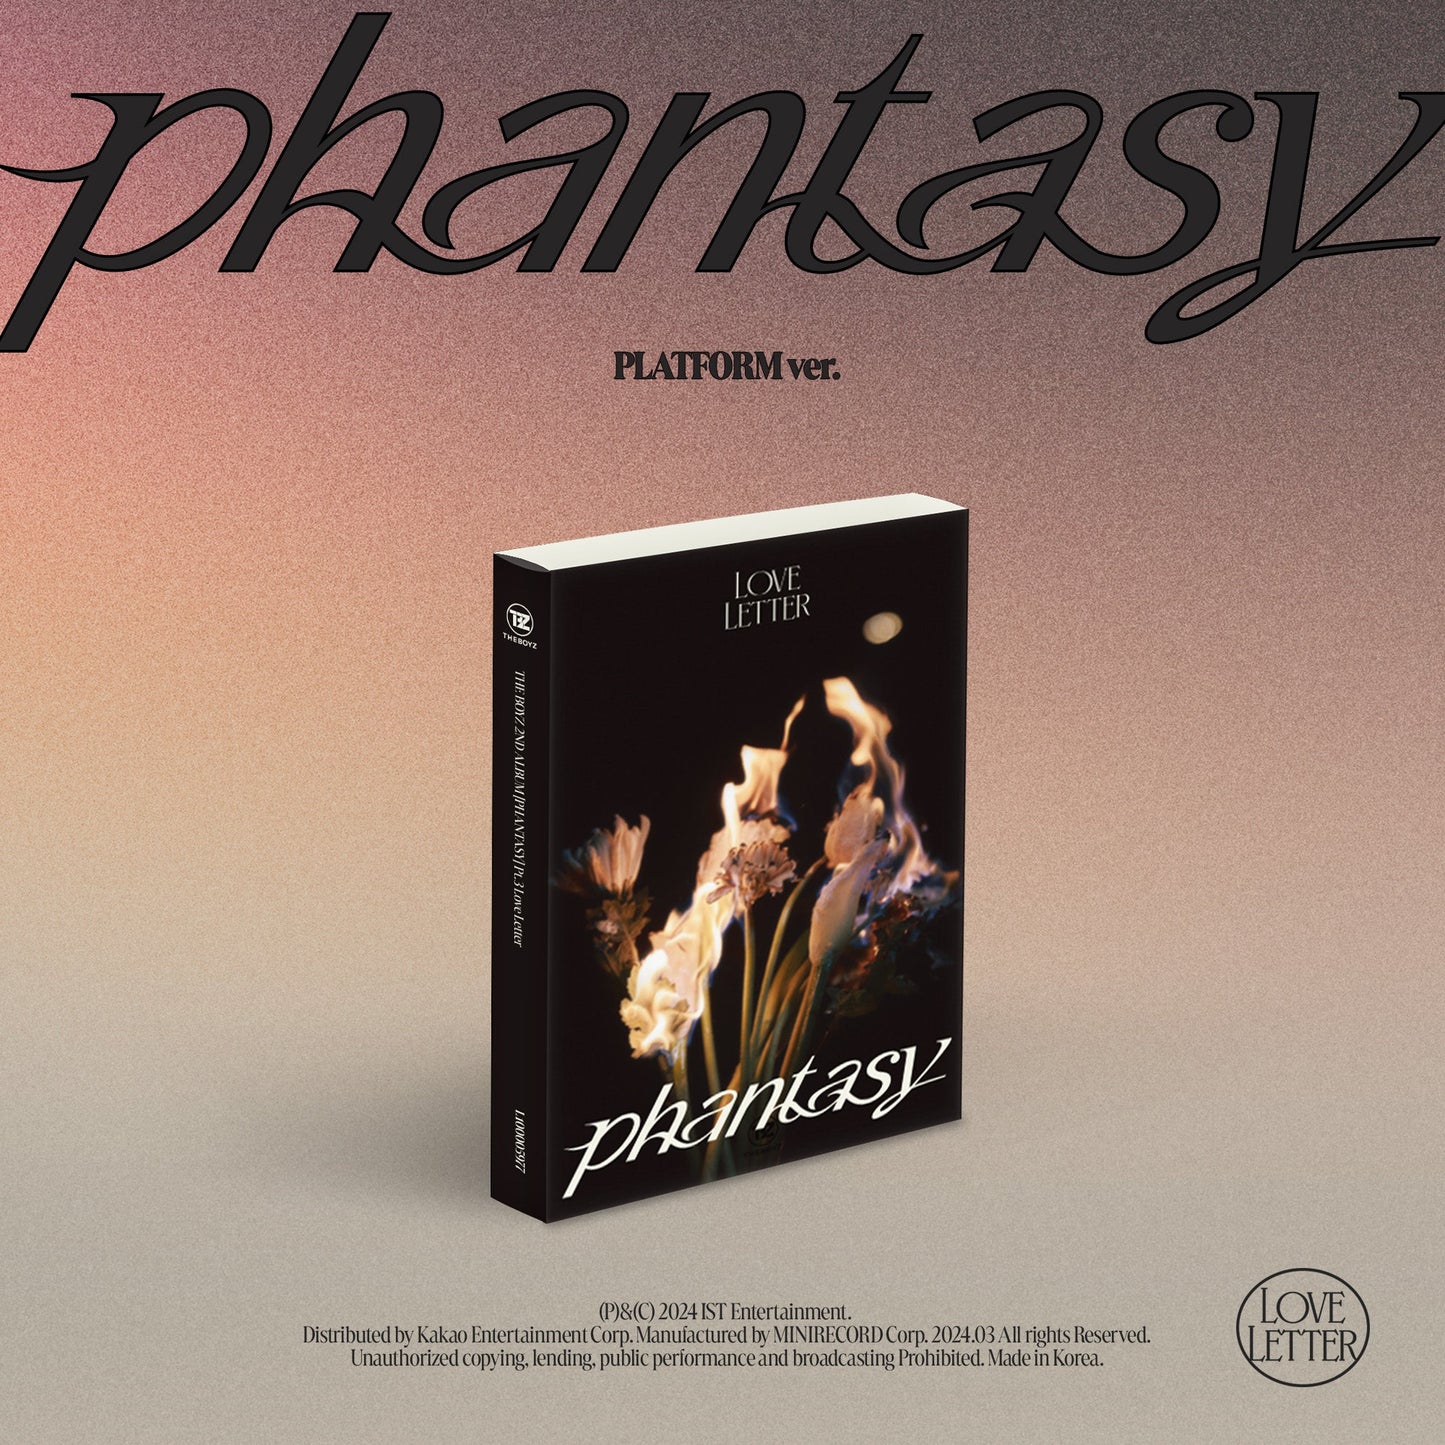 THE BOYZ 2ND ALBUM 'PHANTASY PT. 3 LOVE LETTER' (PLATFORM) SEND VERSION COVER